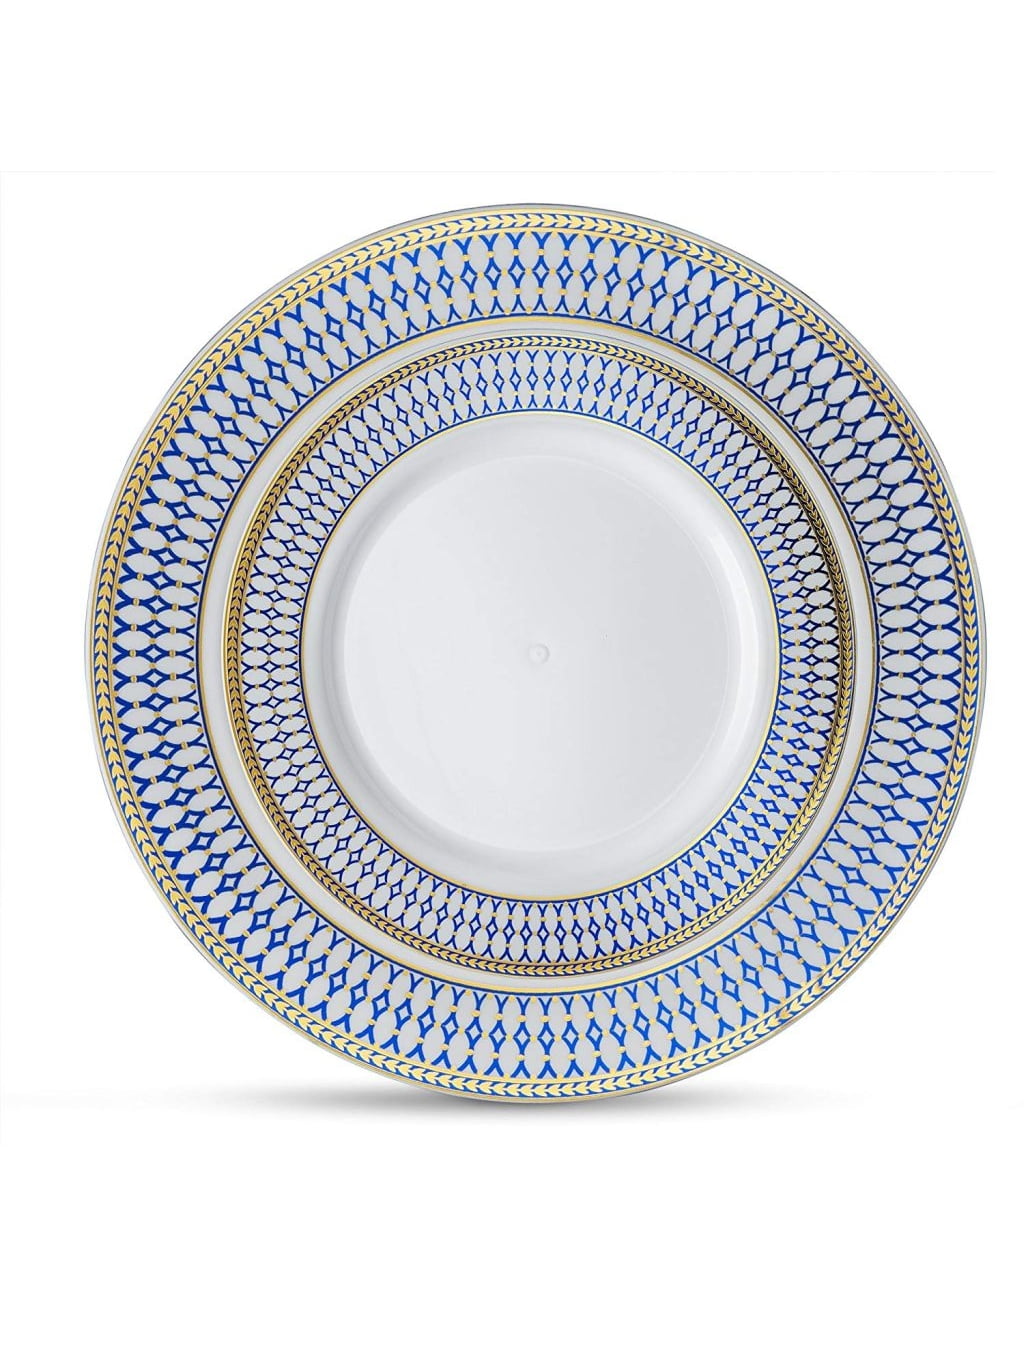 120 10" Square Dinner Wedding Plates COBALT BLUE White-Gold Rim Heavy Disposable 